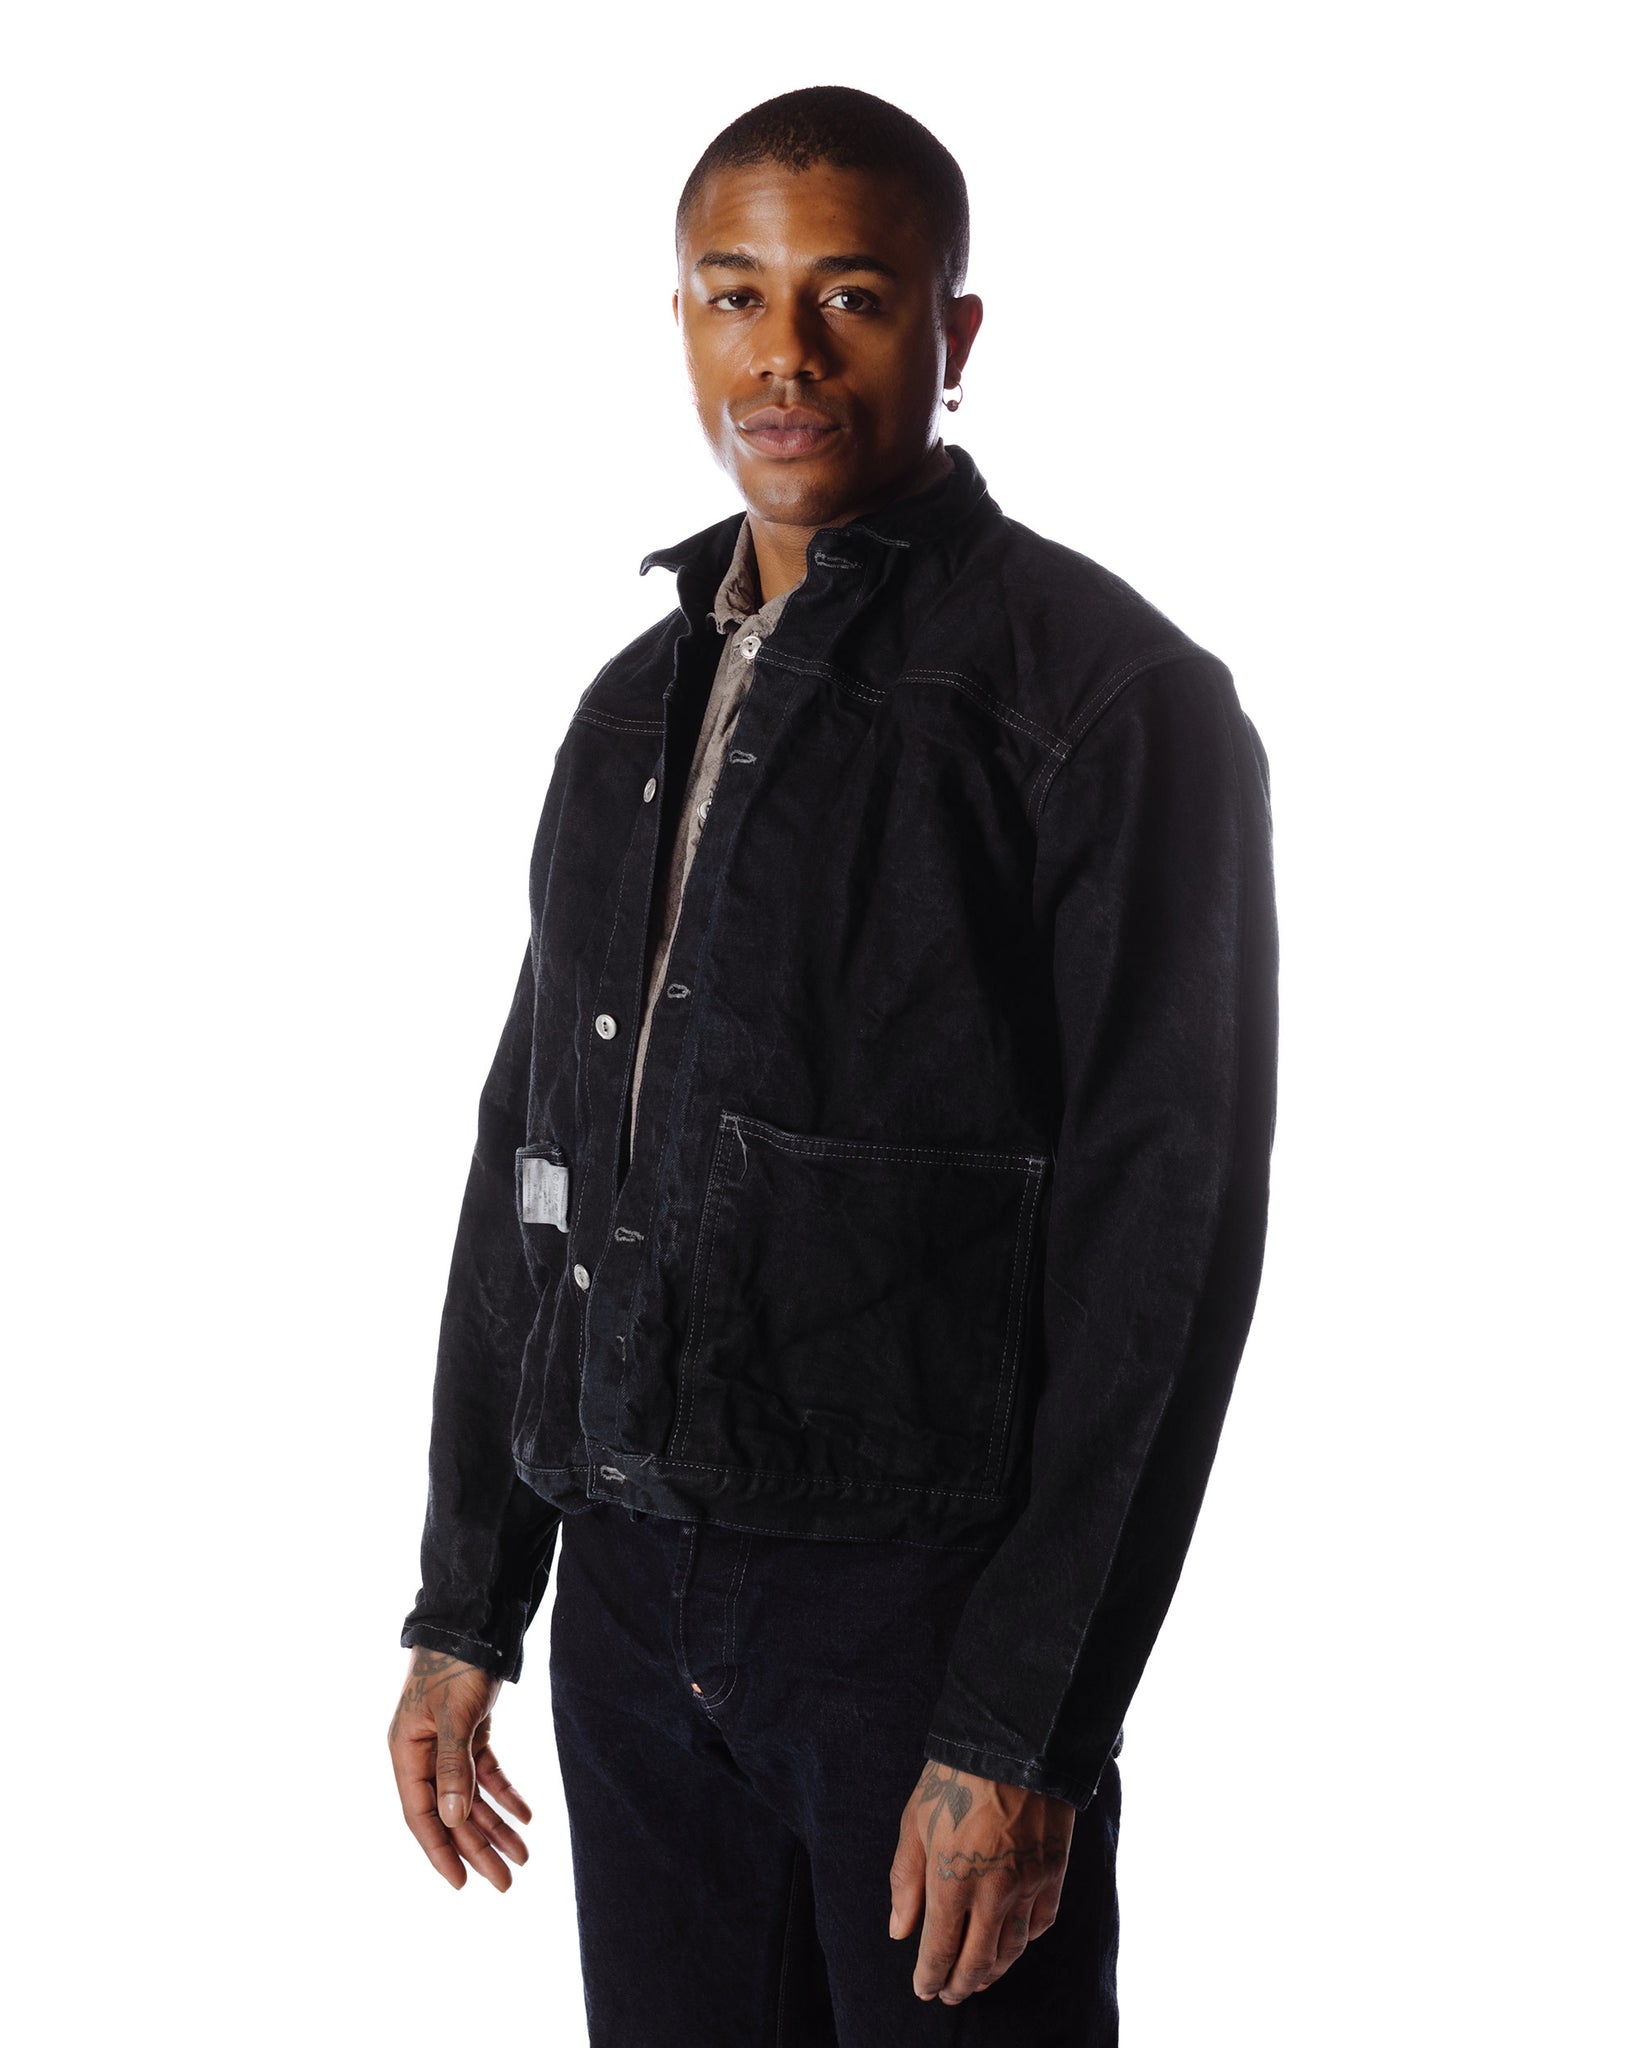 Tender Type 902 Edited Jeans Jacket Mars Black Dyed 16oz Selvage Denim Front